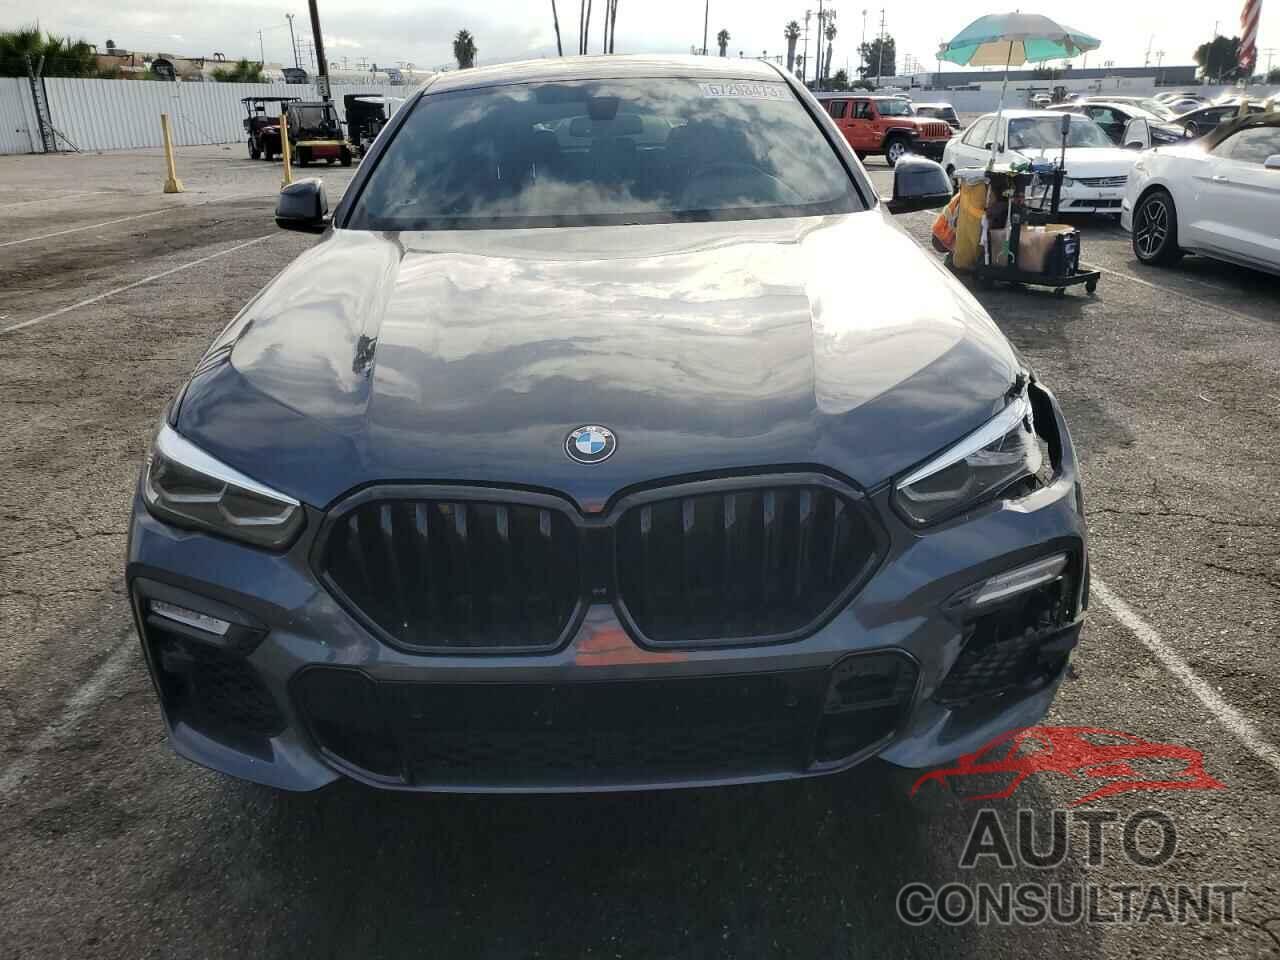 BMW X6 2020 - 5UXCY4C04L9D68899